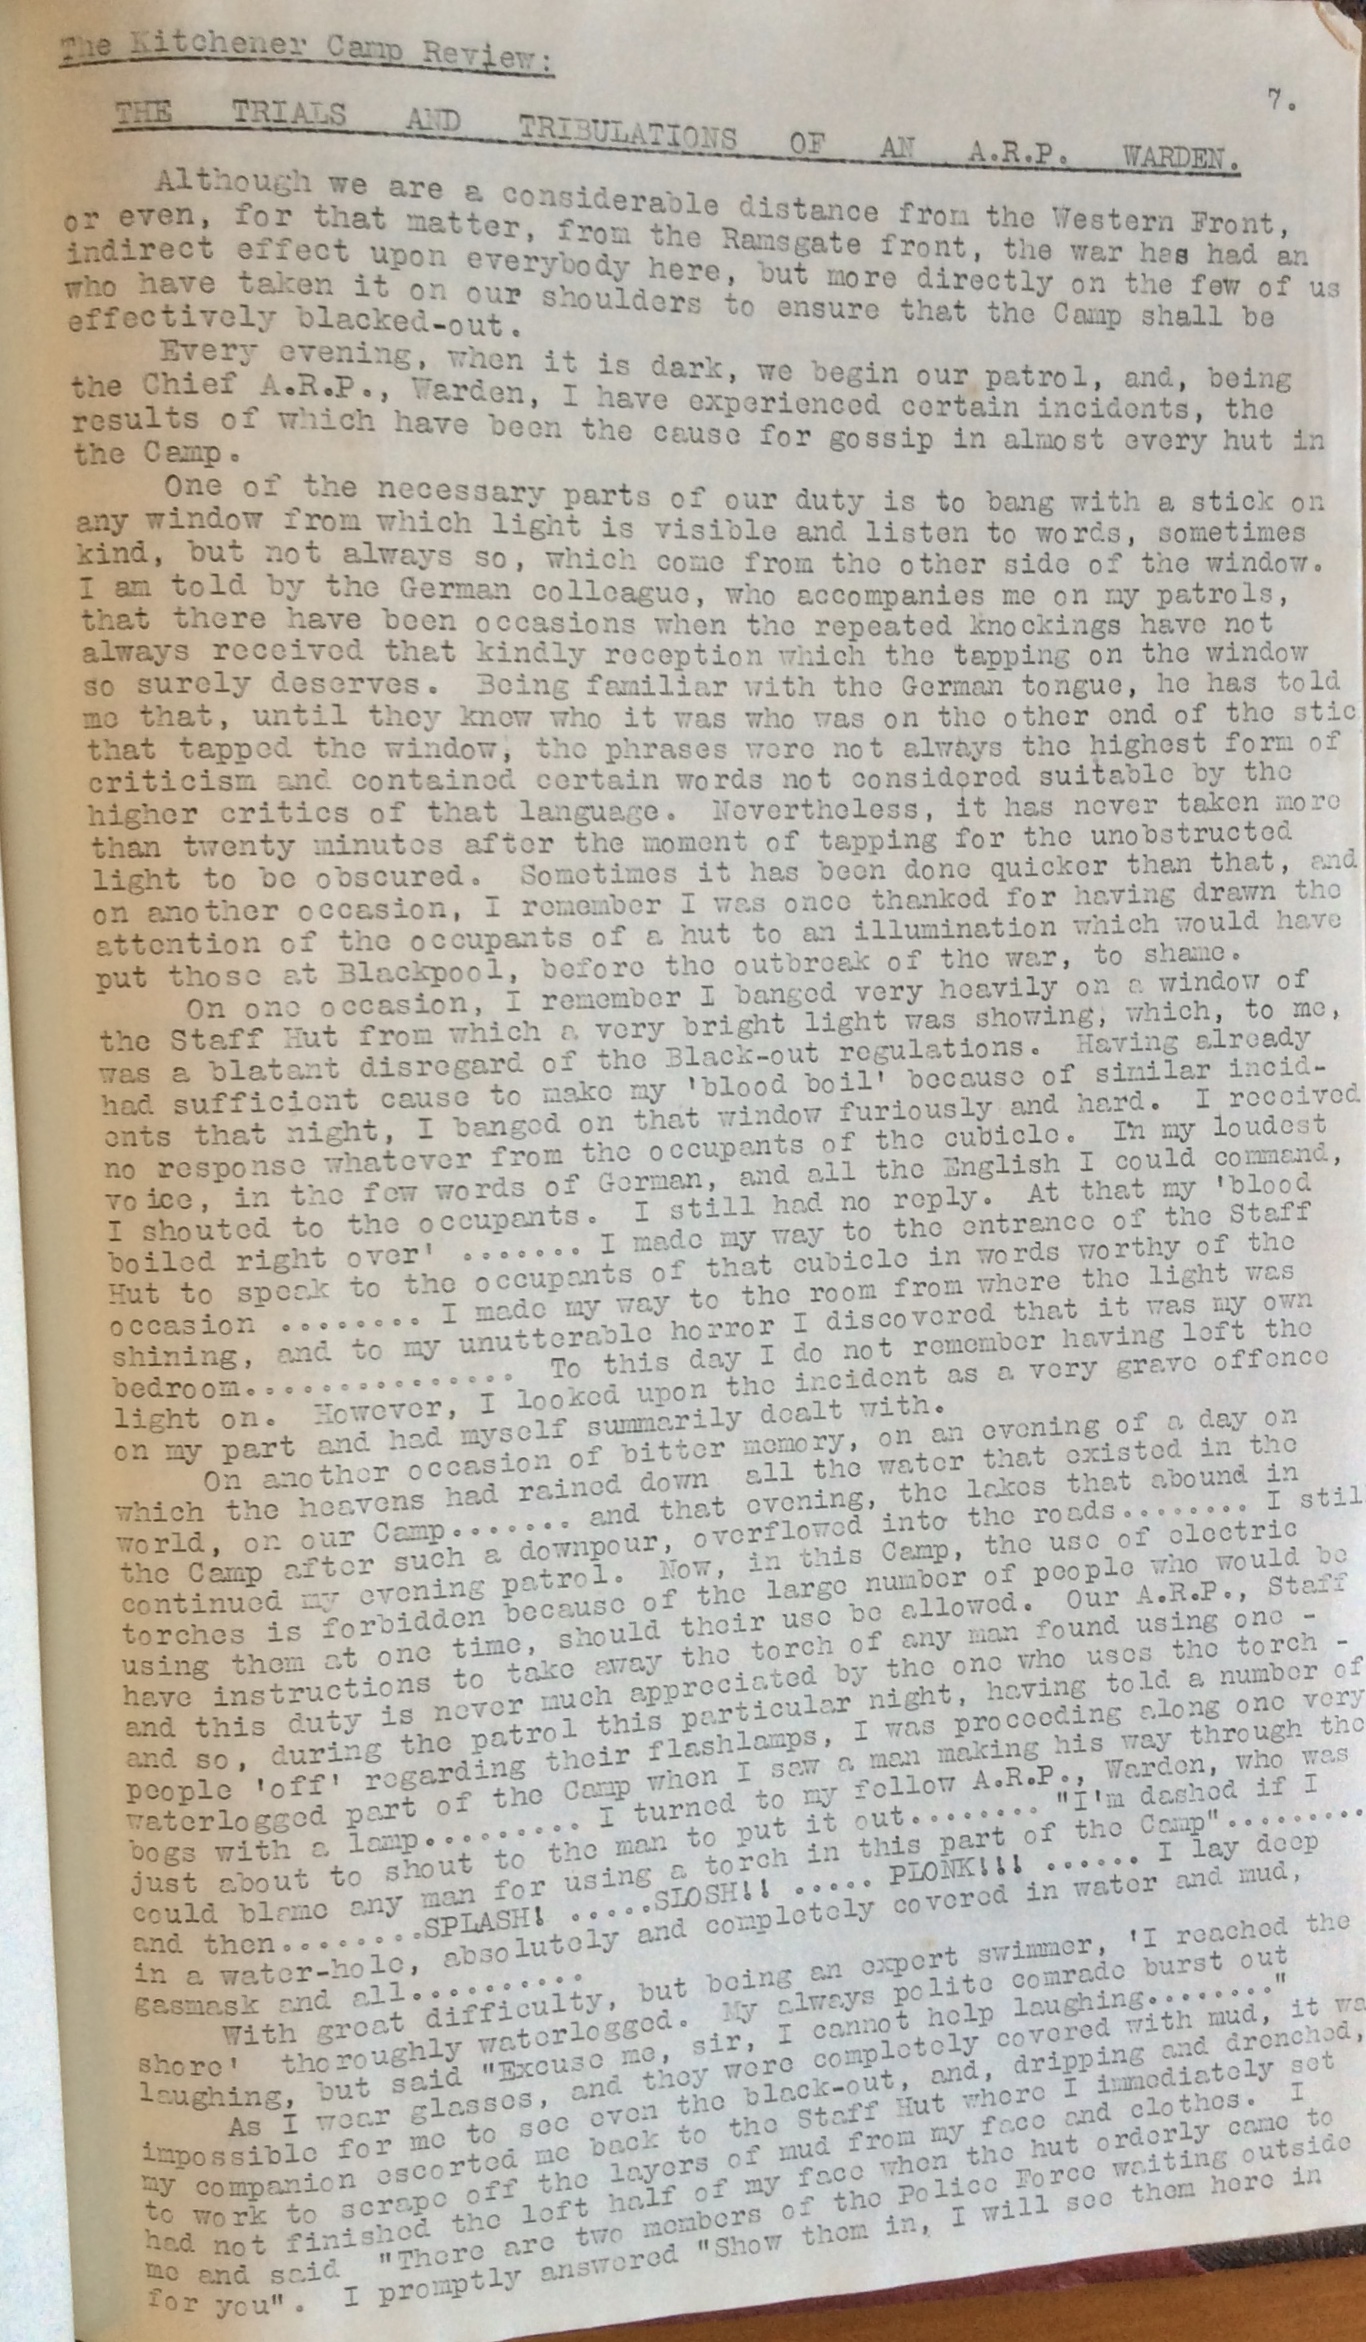 Kitchener Camp Review, November 1939, page 7